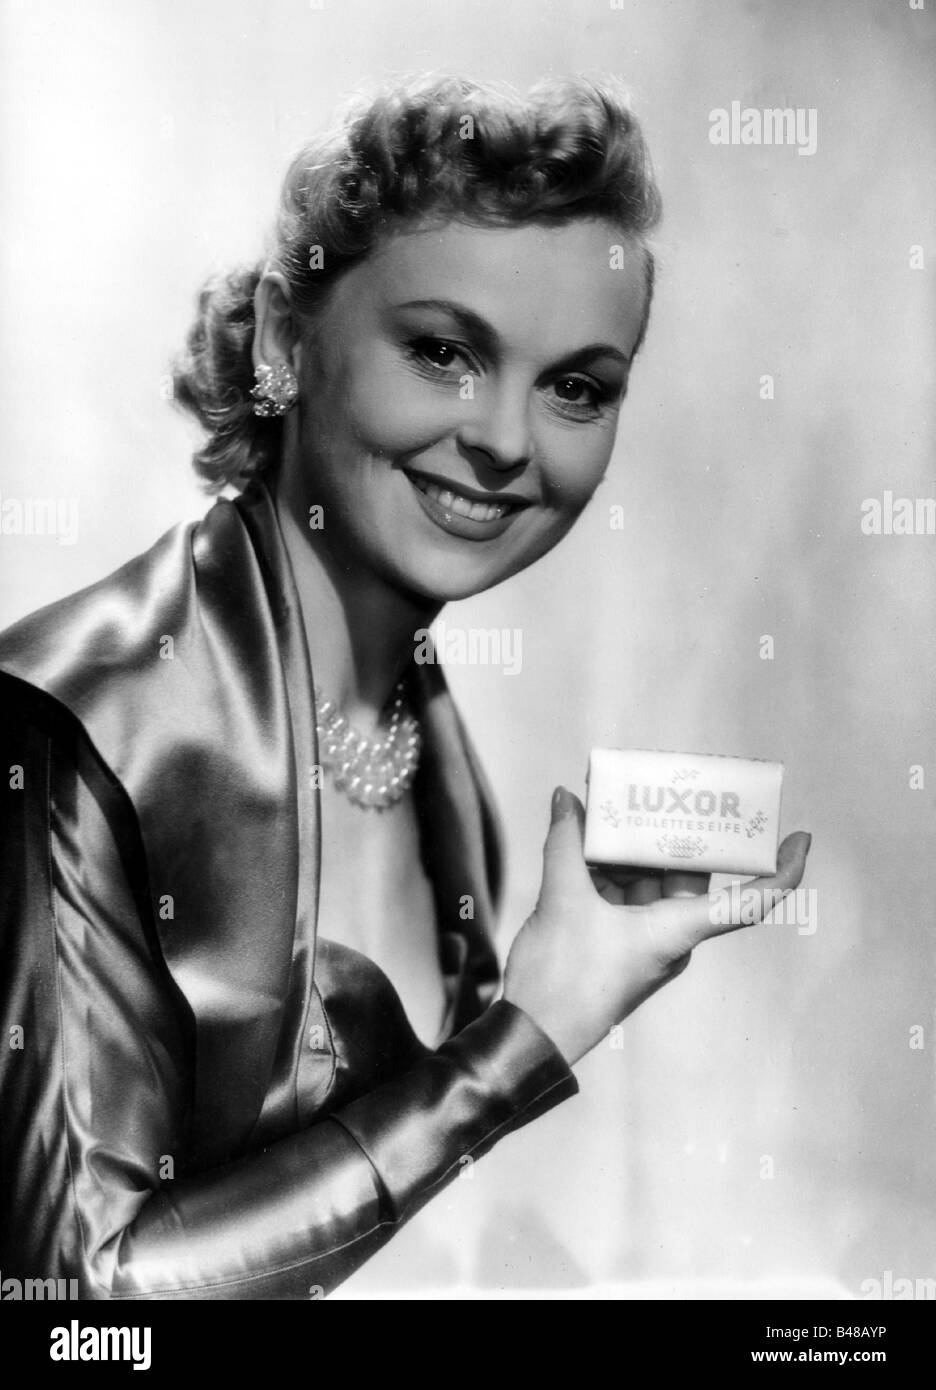 Löbel, Bruni, 20.12.1920 - 27.09.2006, German actress, half length, public relations photo, soap advertisment, Lux soap, 1950s, Stock Photo